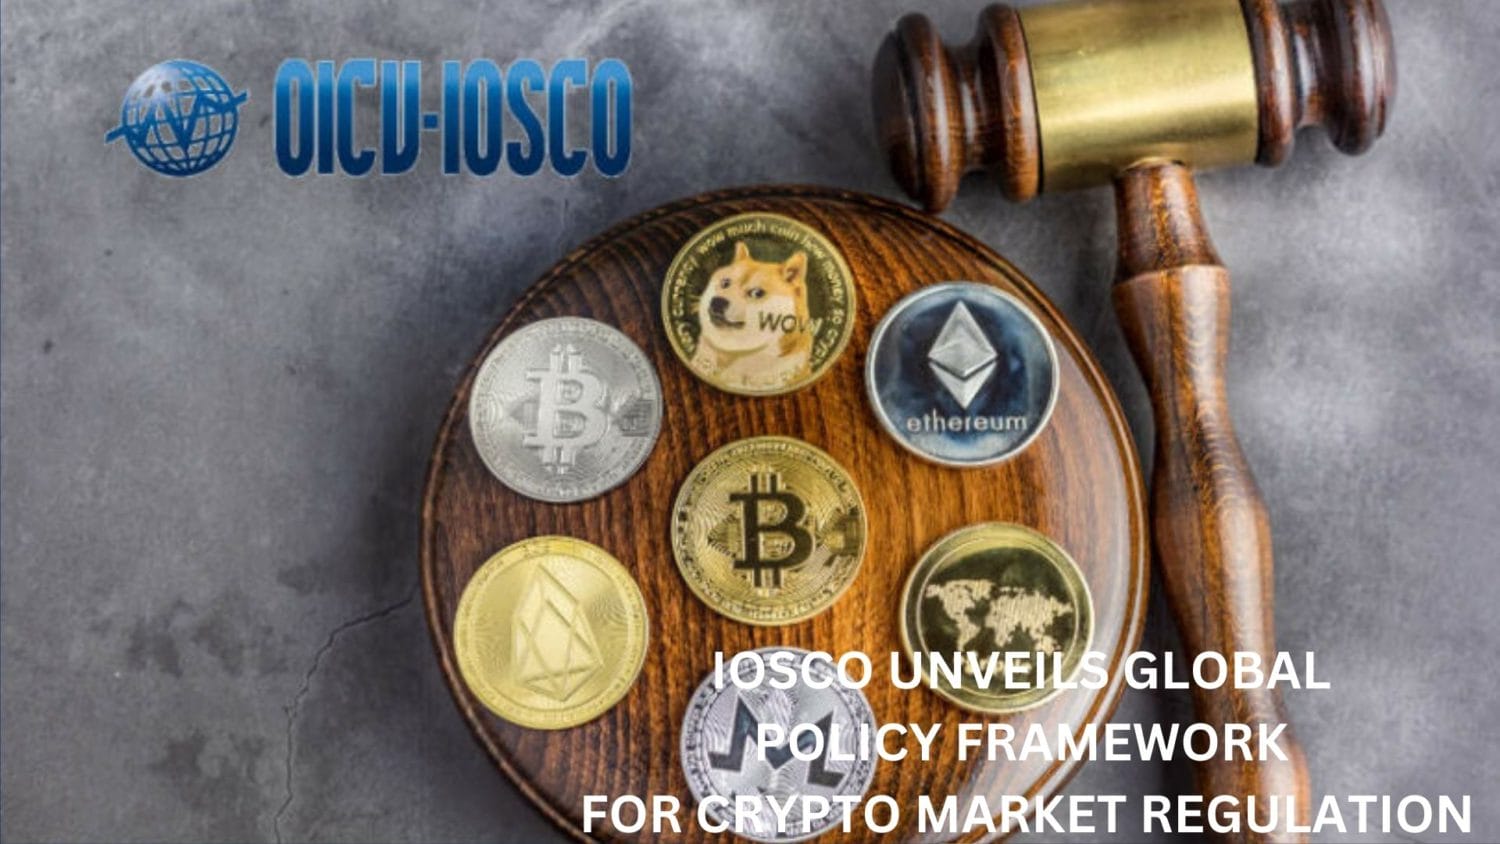 Iosco Unveils Global Policy Framework For Crypto Market Regulation